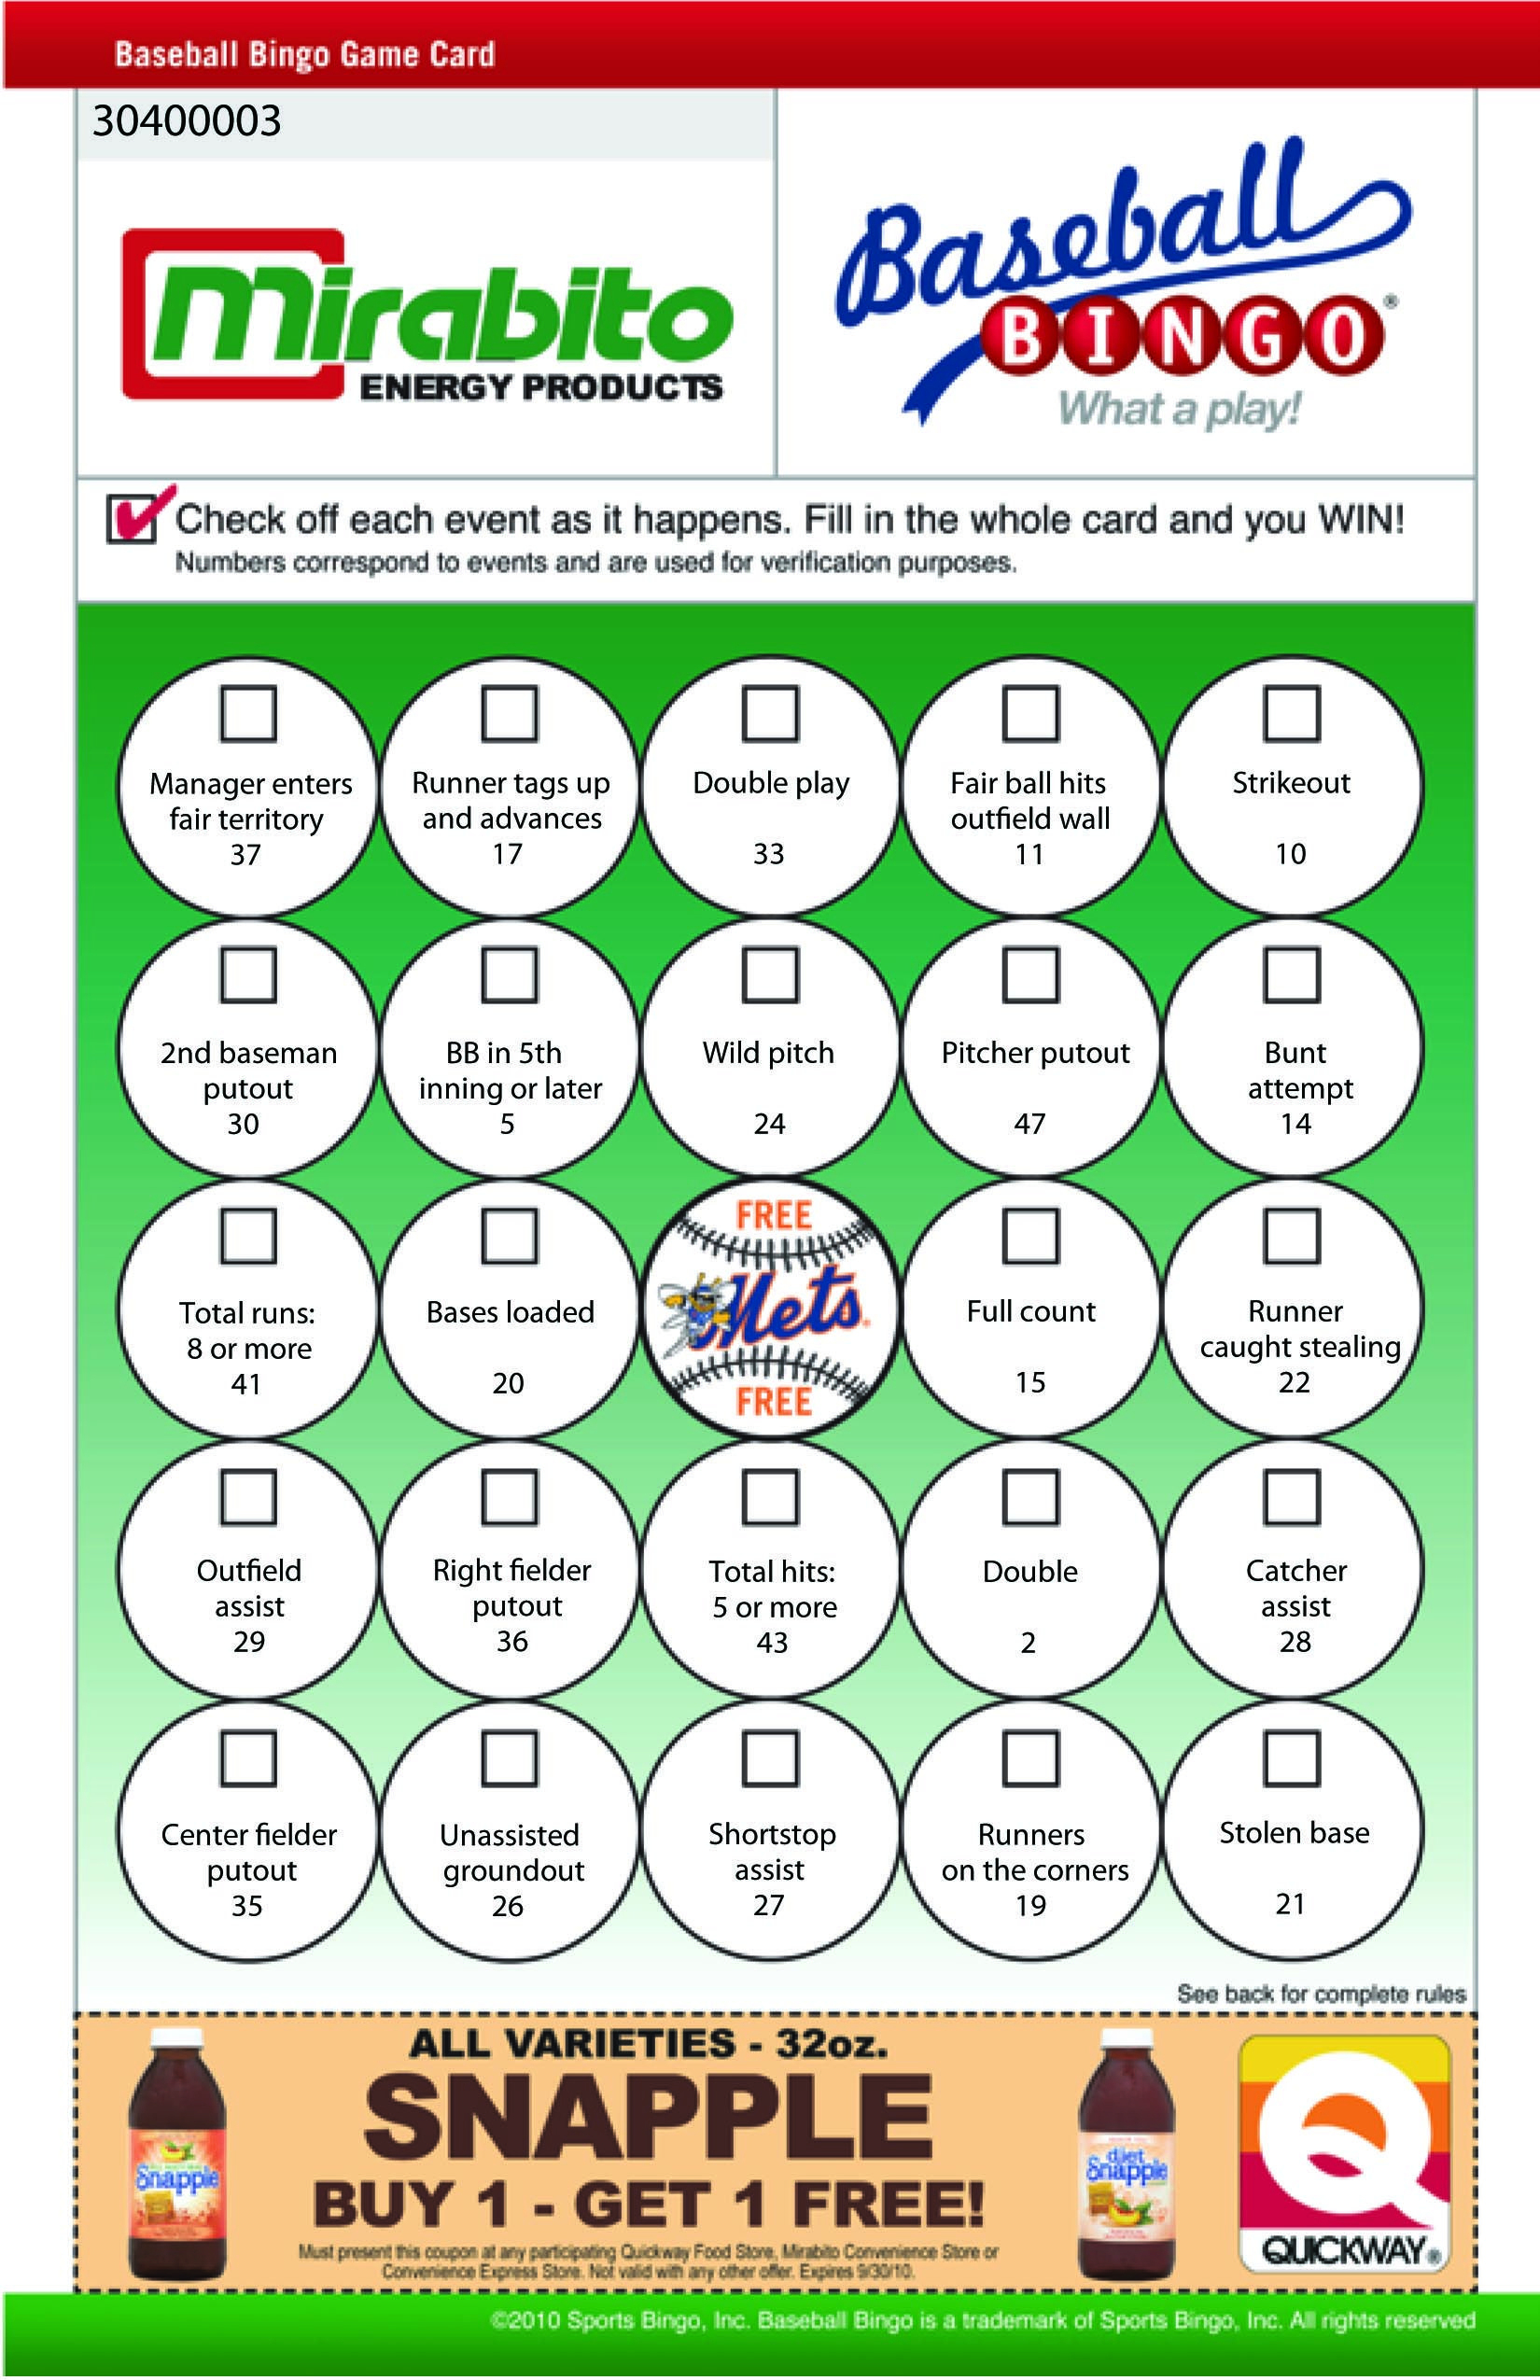 Sideline Sports - Baseball Bingo (Copyright 2014) Http